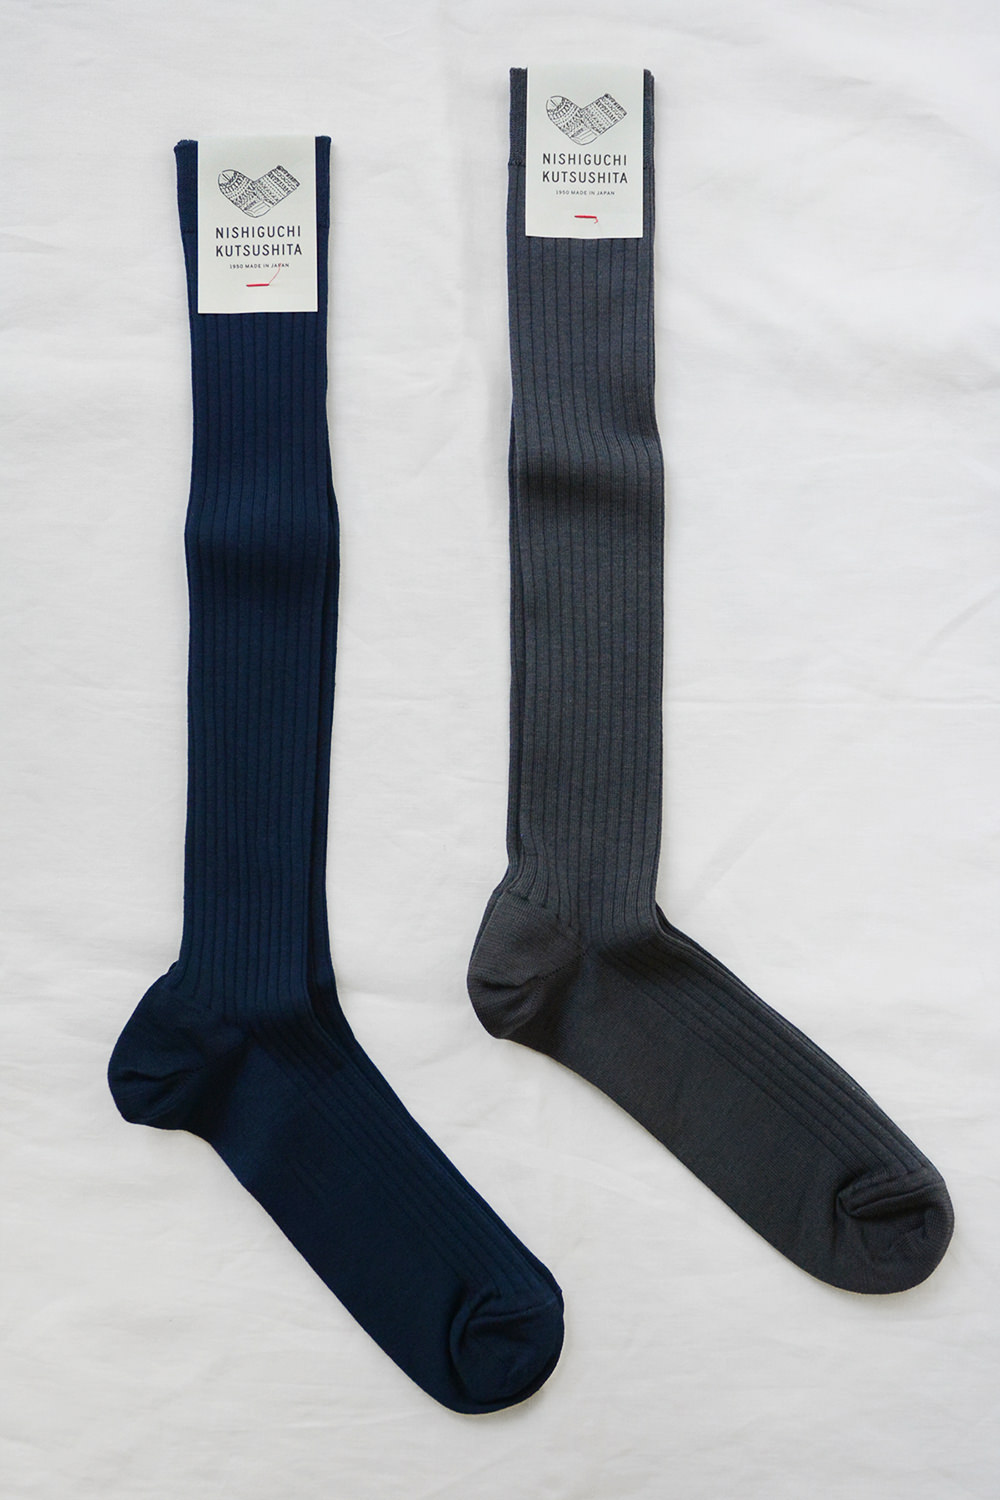 Nishiguchi Kutsushita, Socks Silk Cotton Socks Long Top Picture